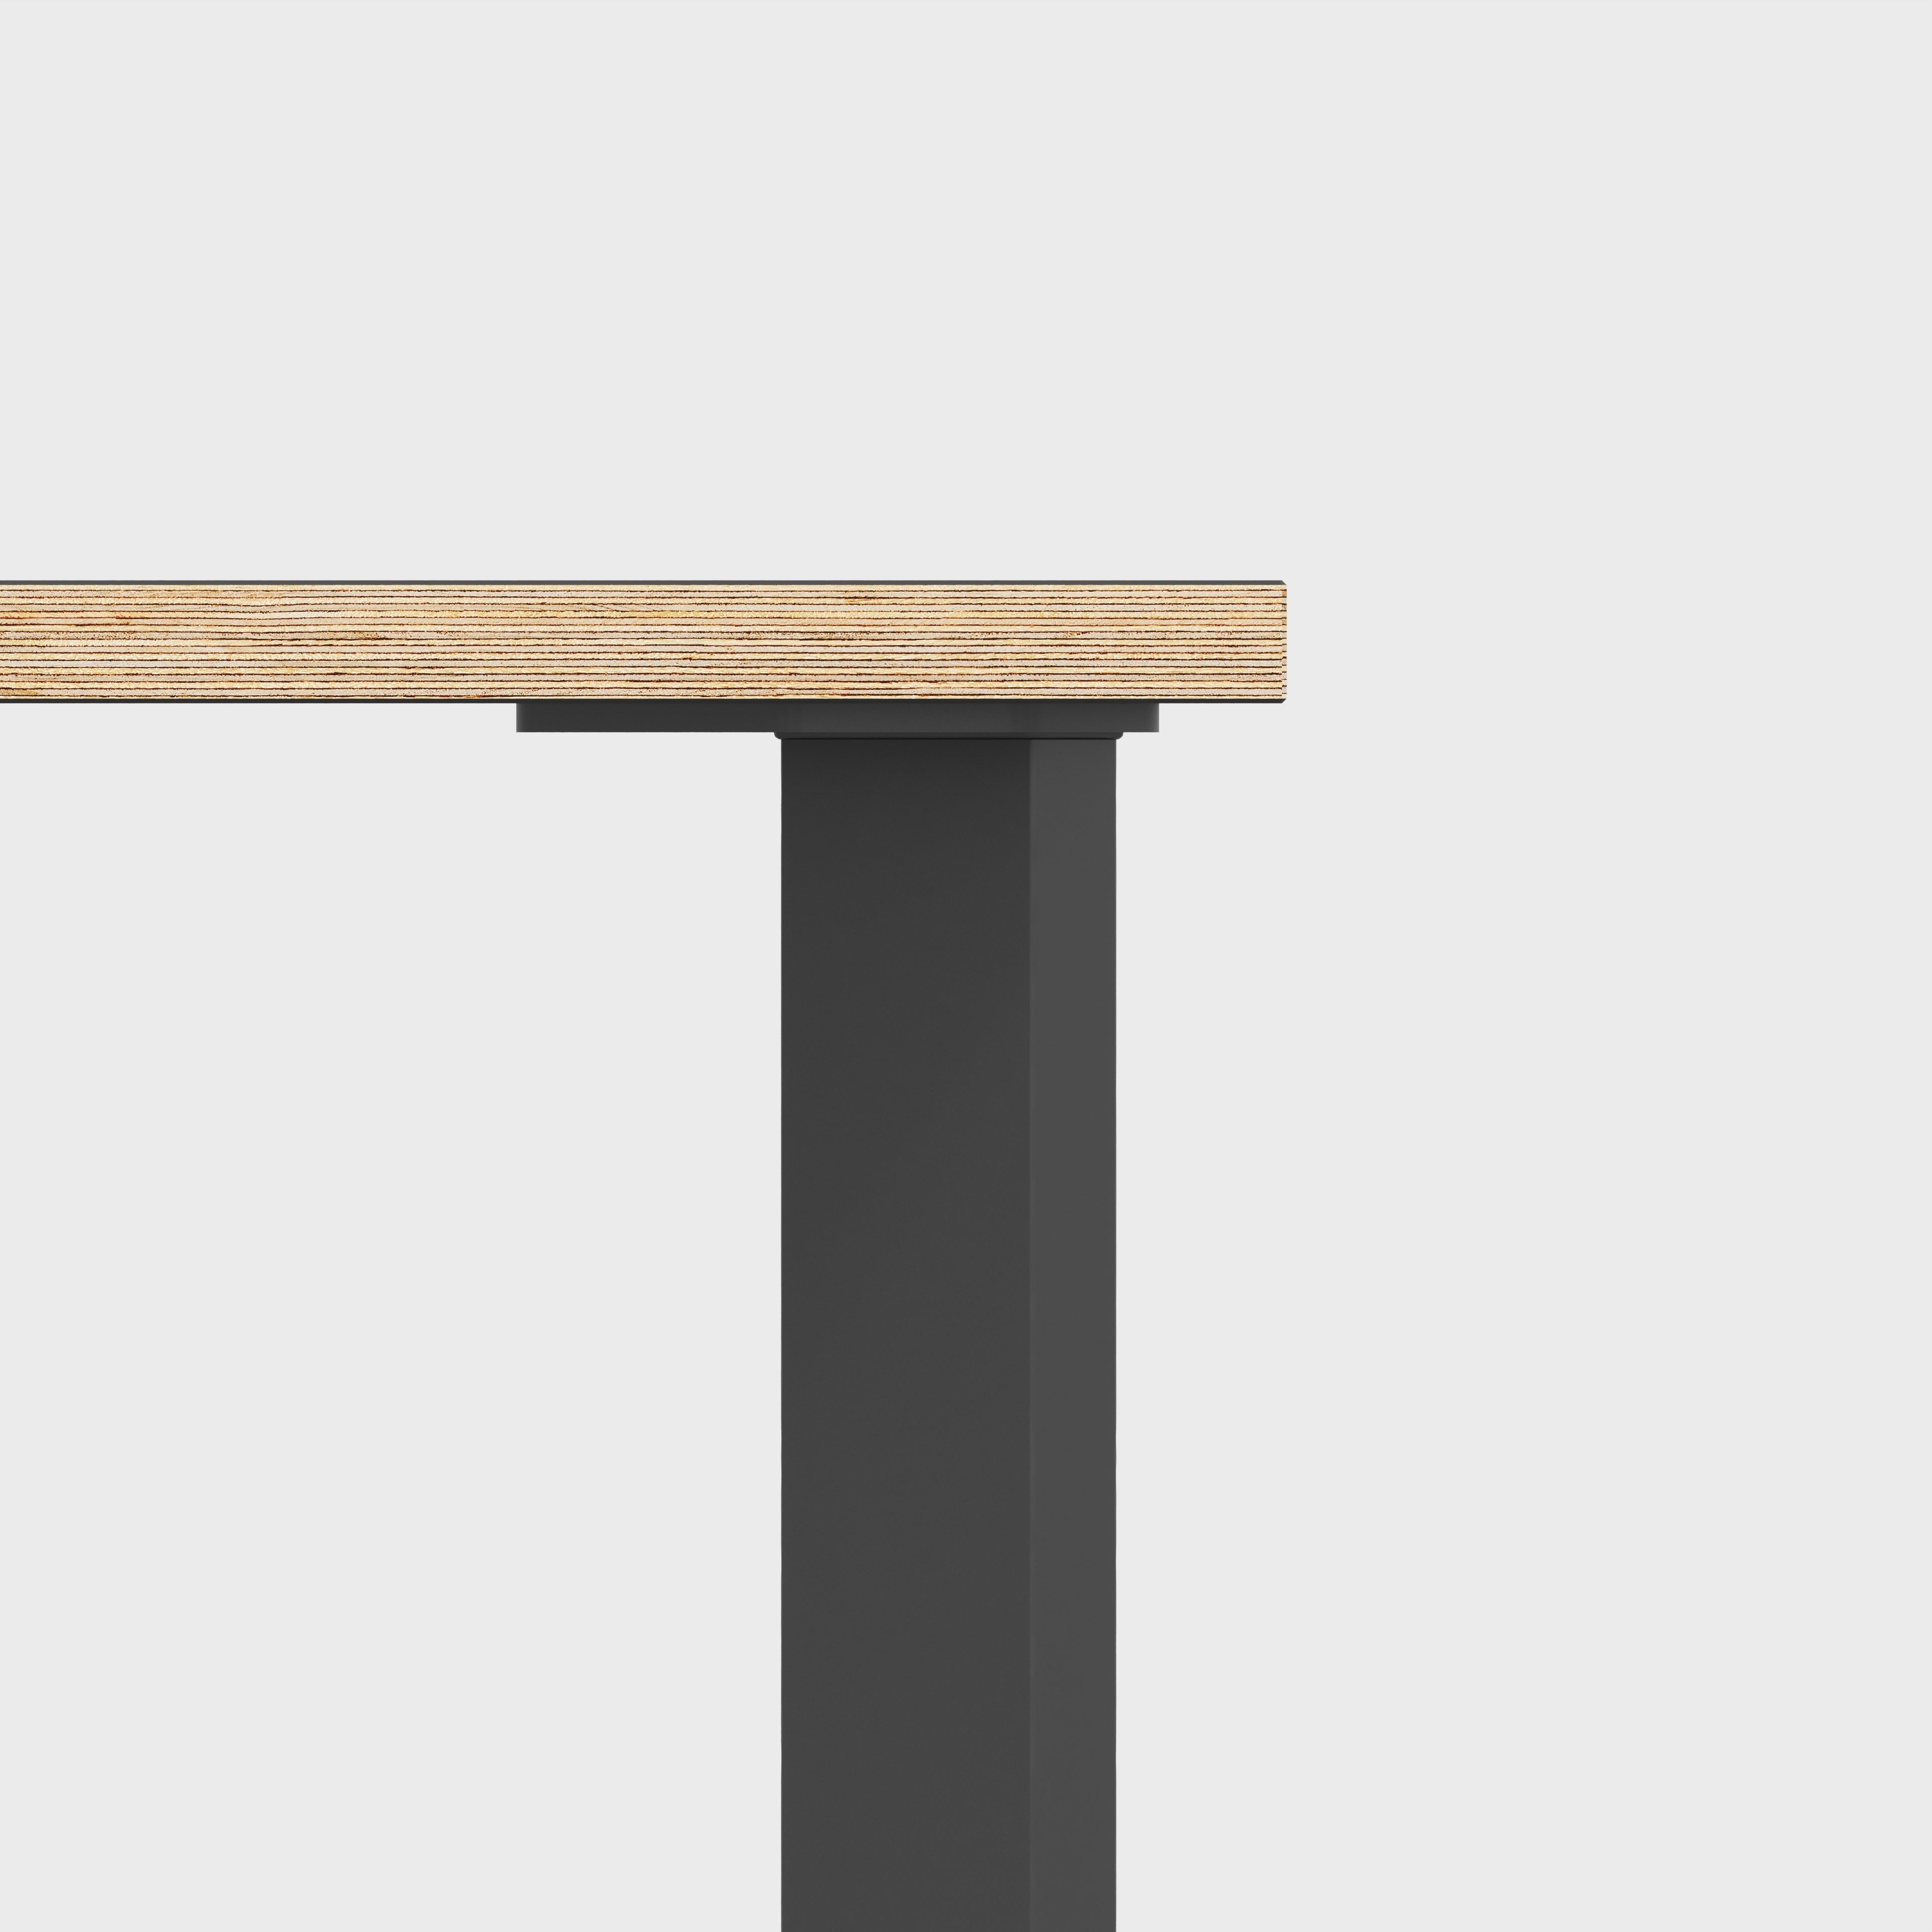 Desk with Black Rectangular Single Pin Legs - Formica Levante Orange - 1200(w) x 600(d) x 735(h)